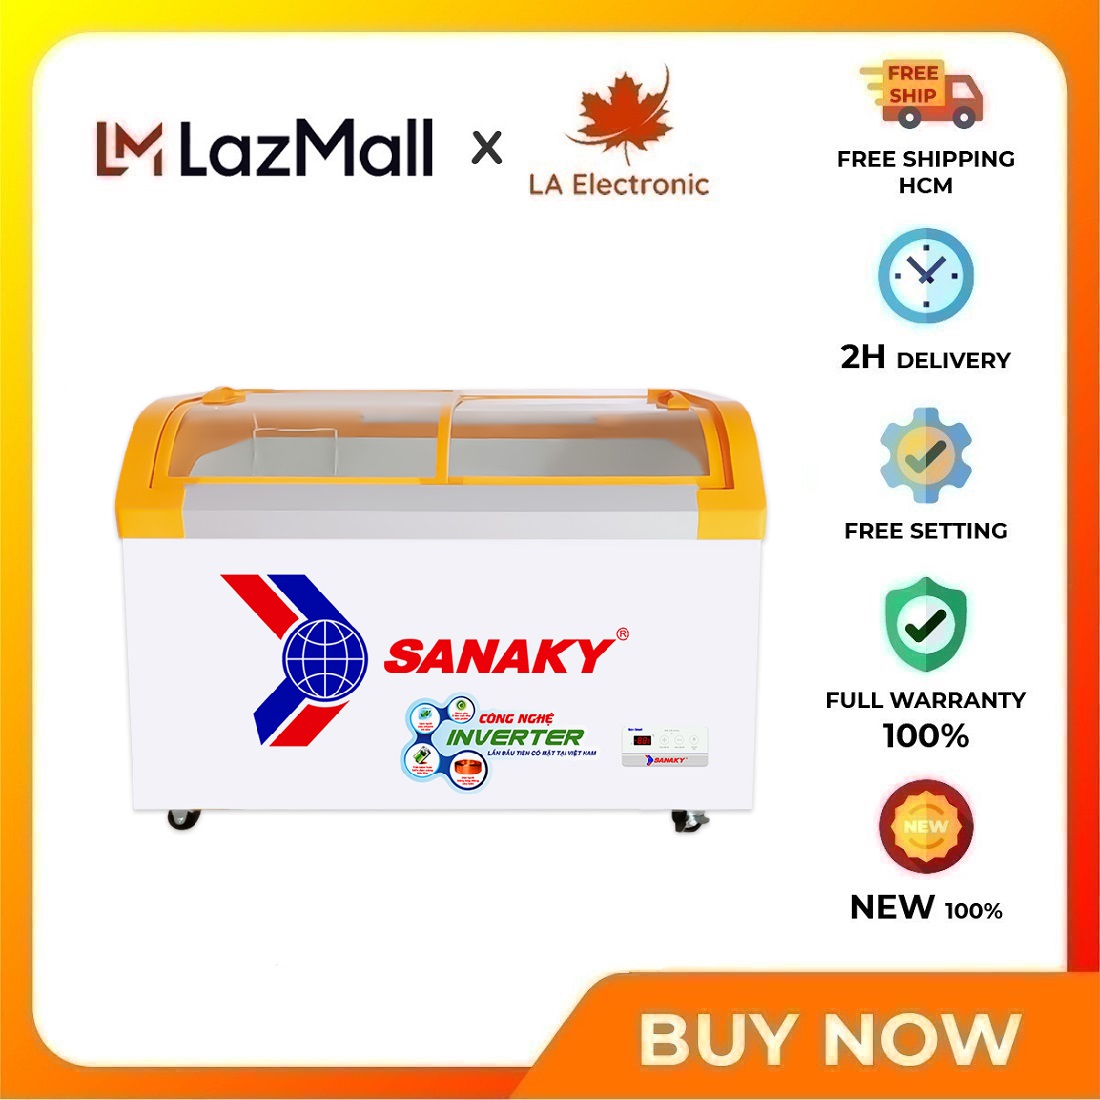 Sanaky Freezer VH-4899K3B - Free shipping HCM - TEMPERATURE